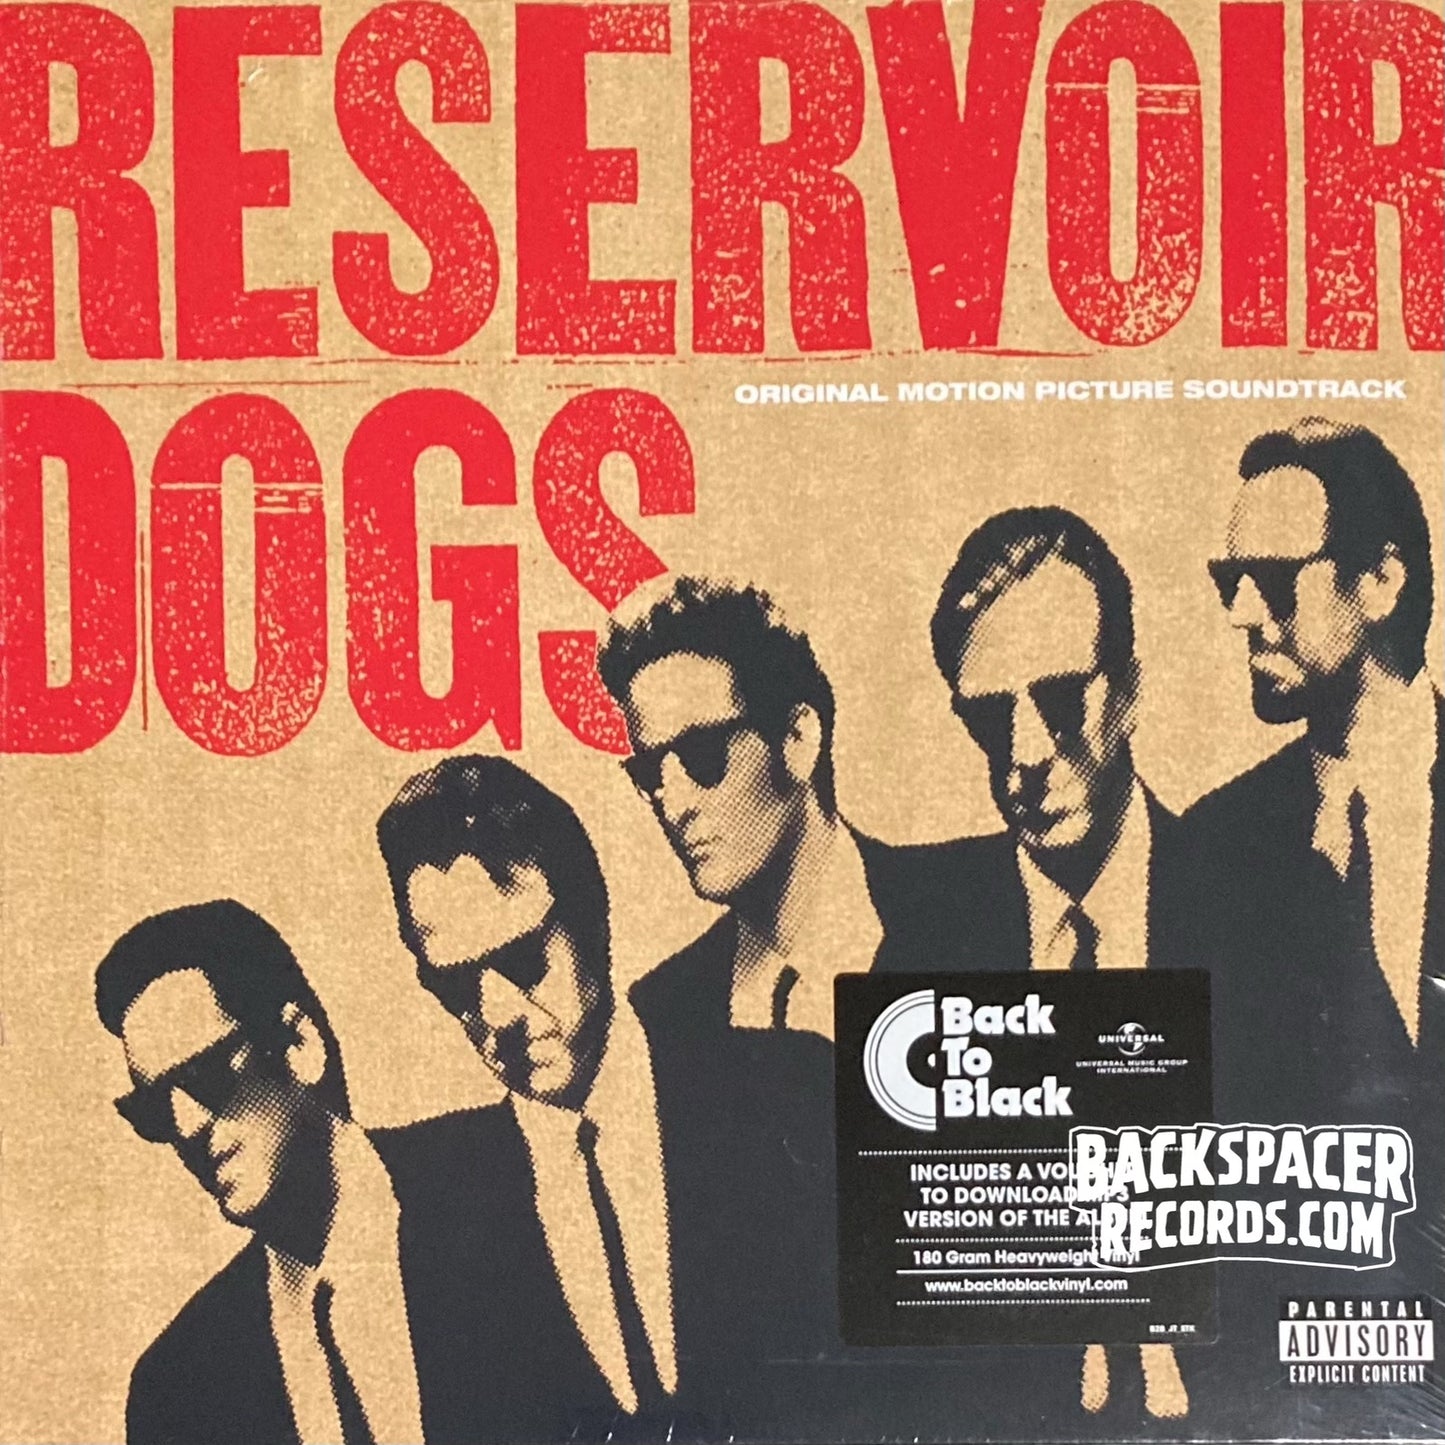 Reservoir Dogs: Original Motion Picture Soundtrack - Various Artists LP (Sealed)